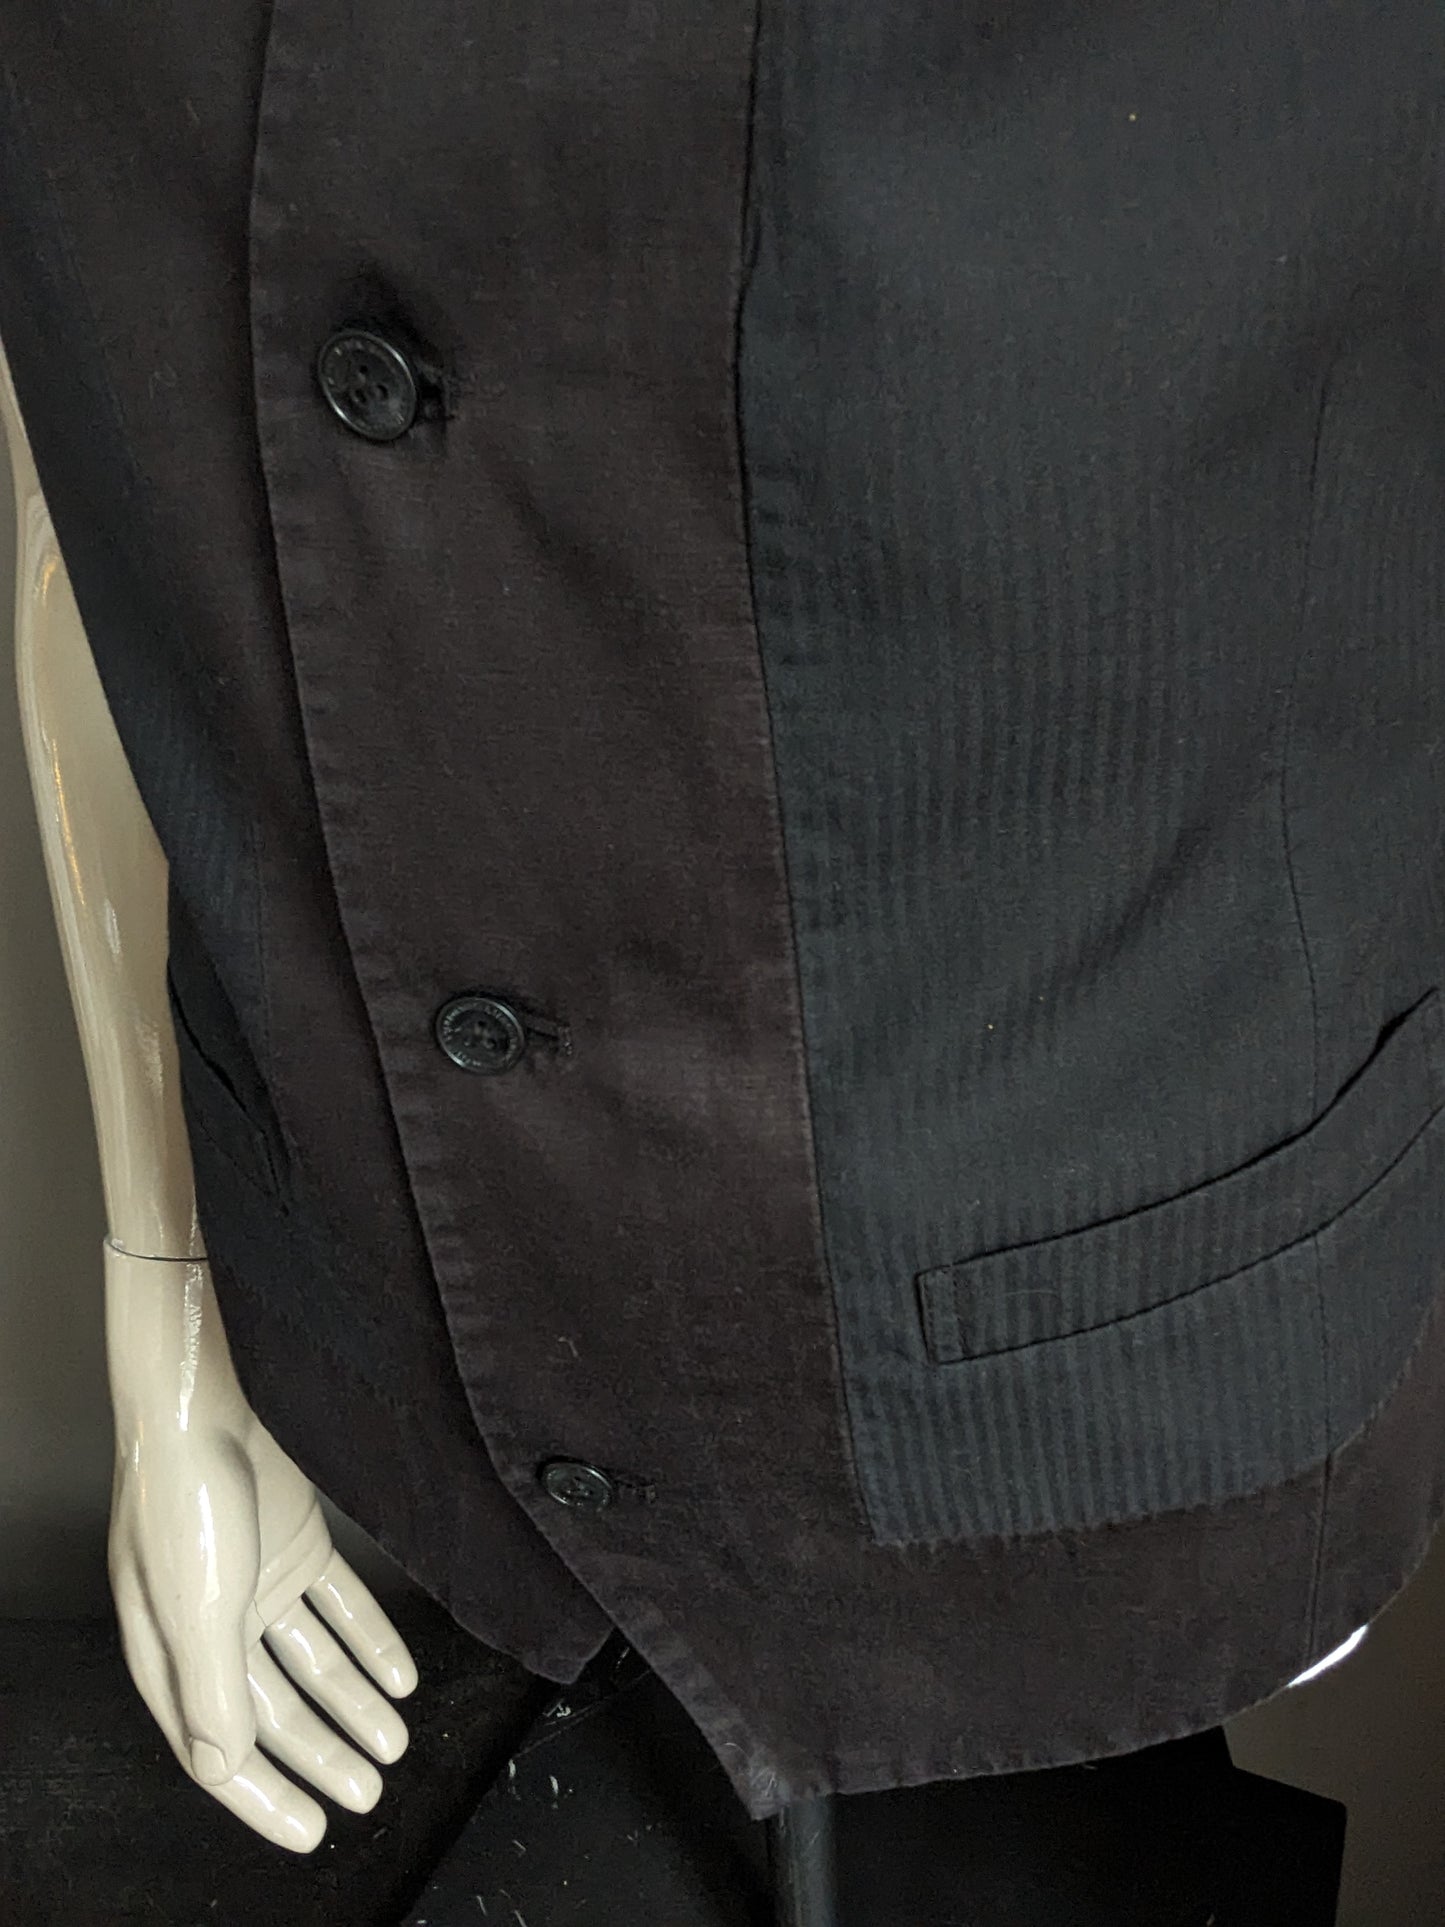 JC Rags waistcoat. Black striped motif. Size L.